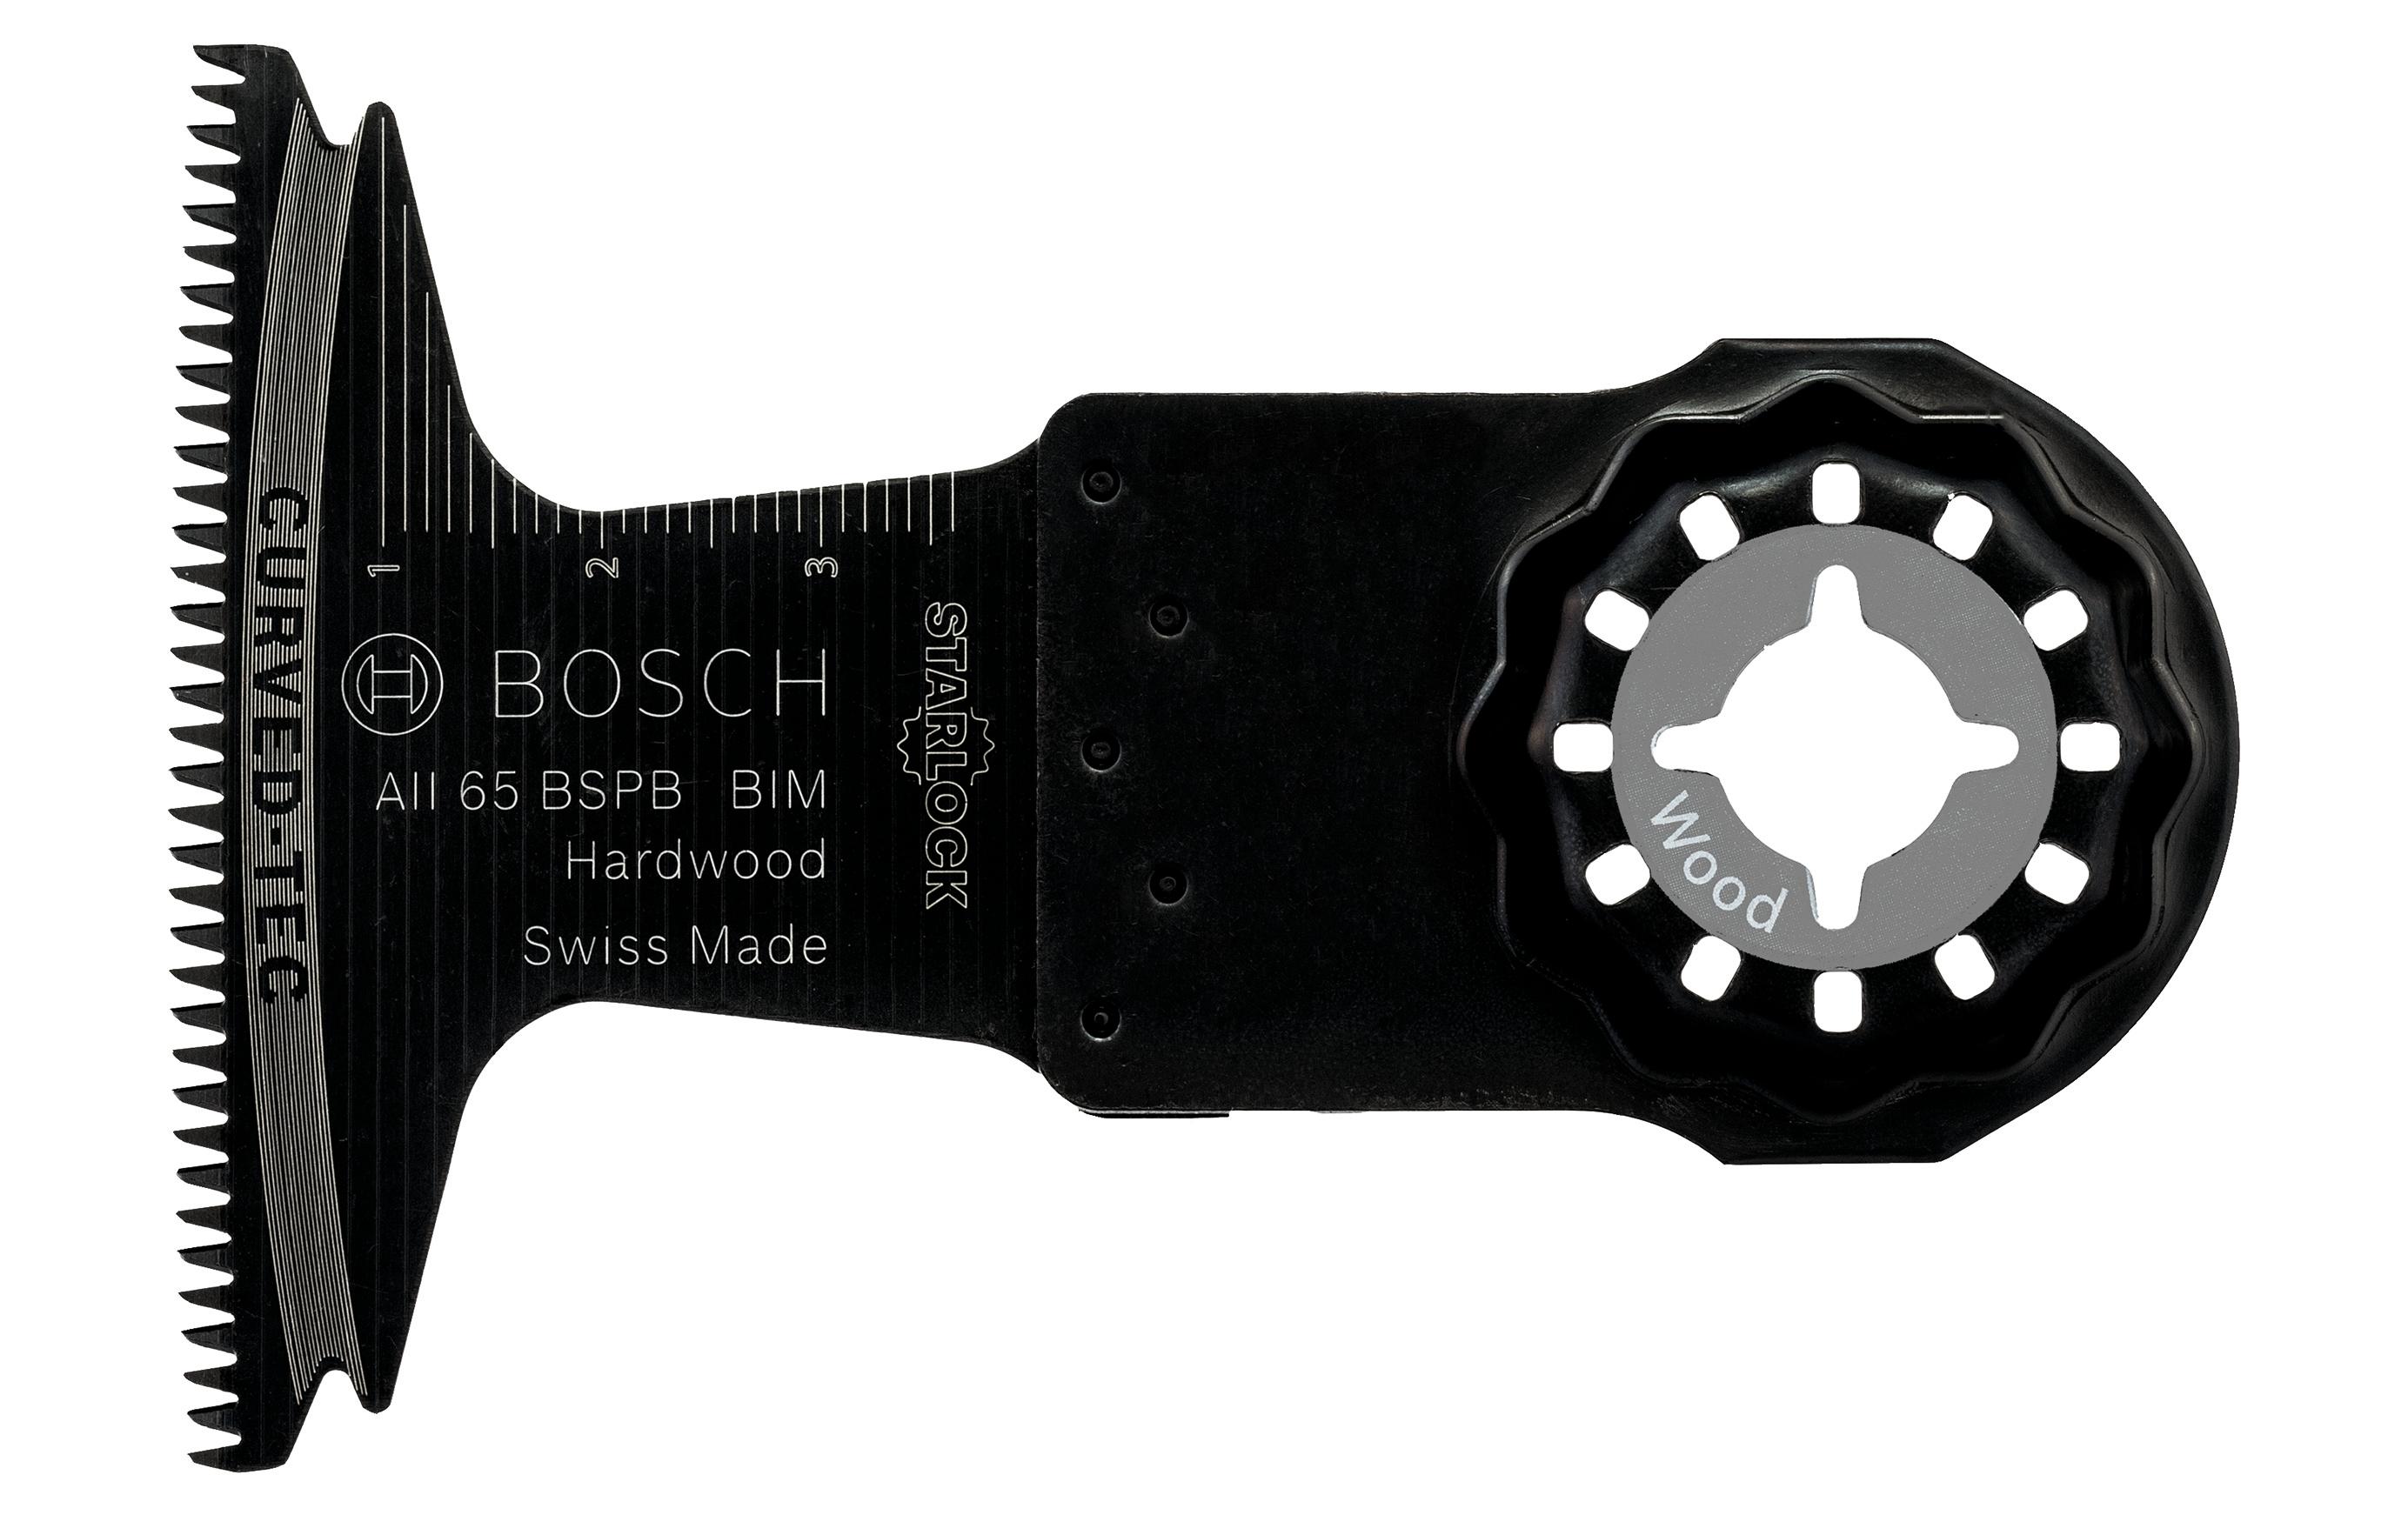 Bosch Professional BIM Tauchsägeblatt AII 65 BSPB Hart Holz, 40 x 65 mm